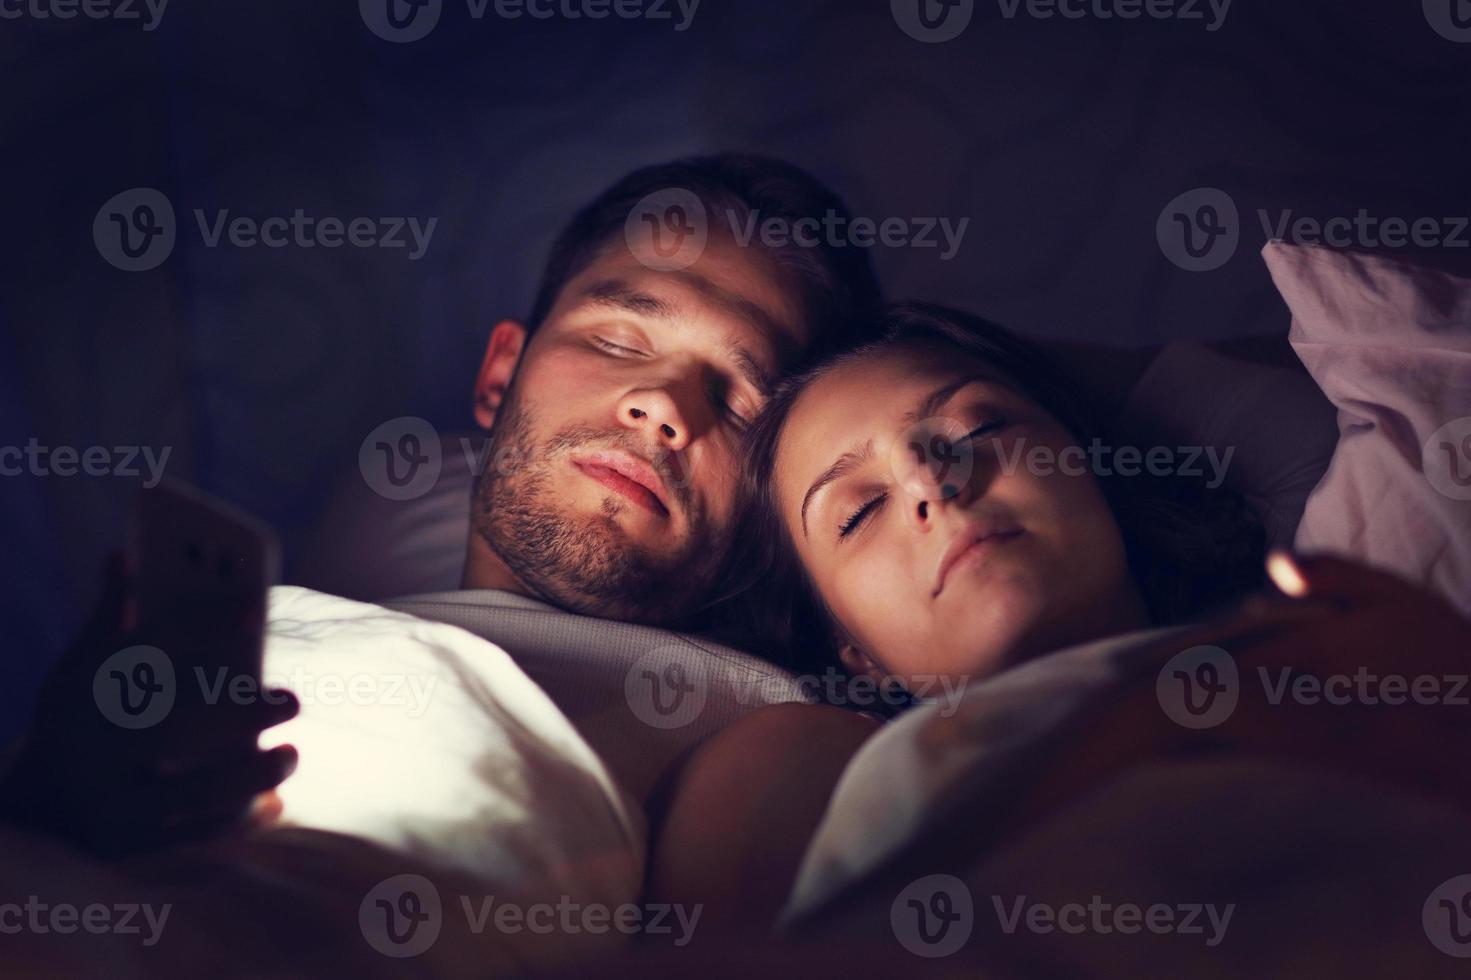 pareja joven usando teléfonos inteligentes en la cama por la noche foto